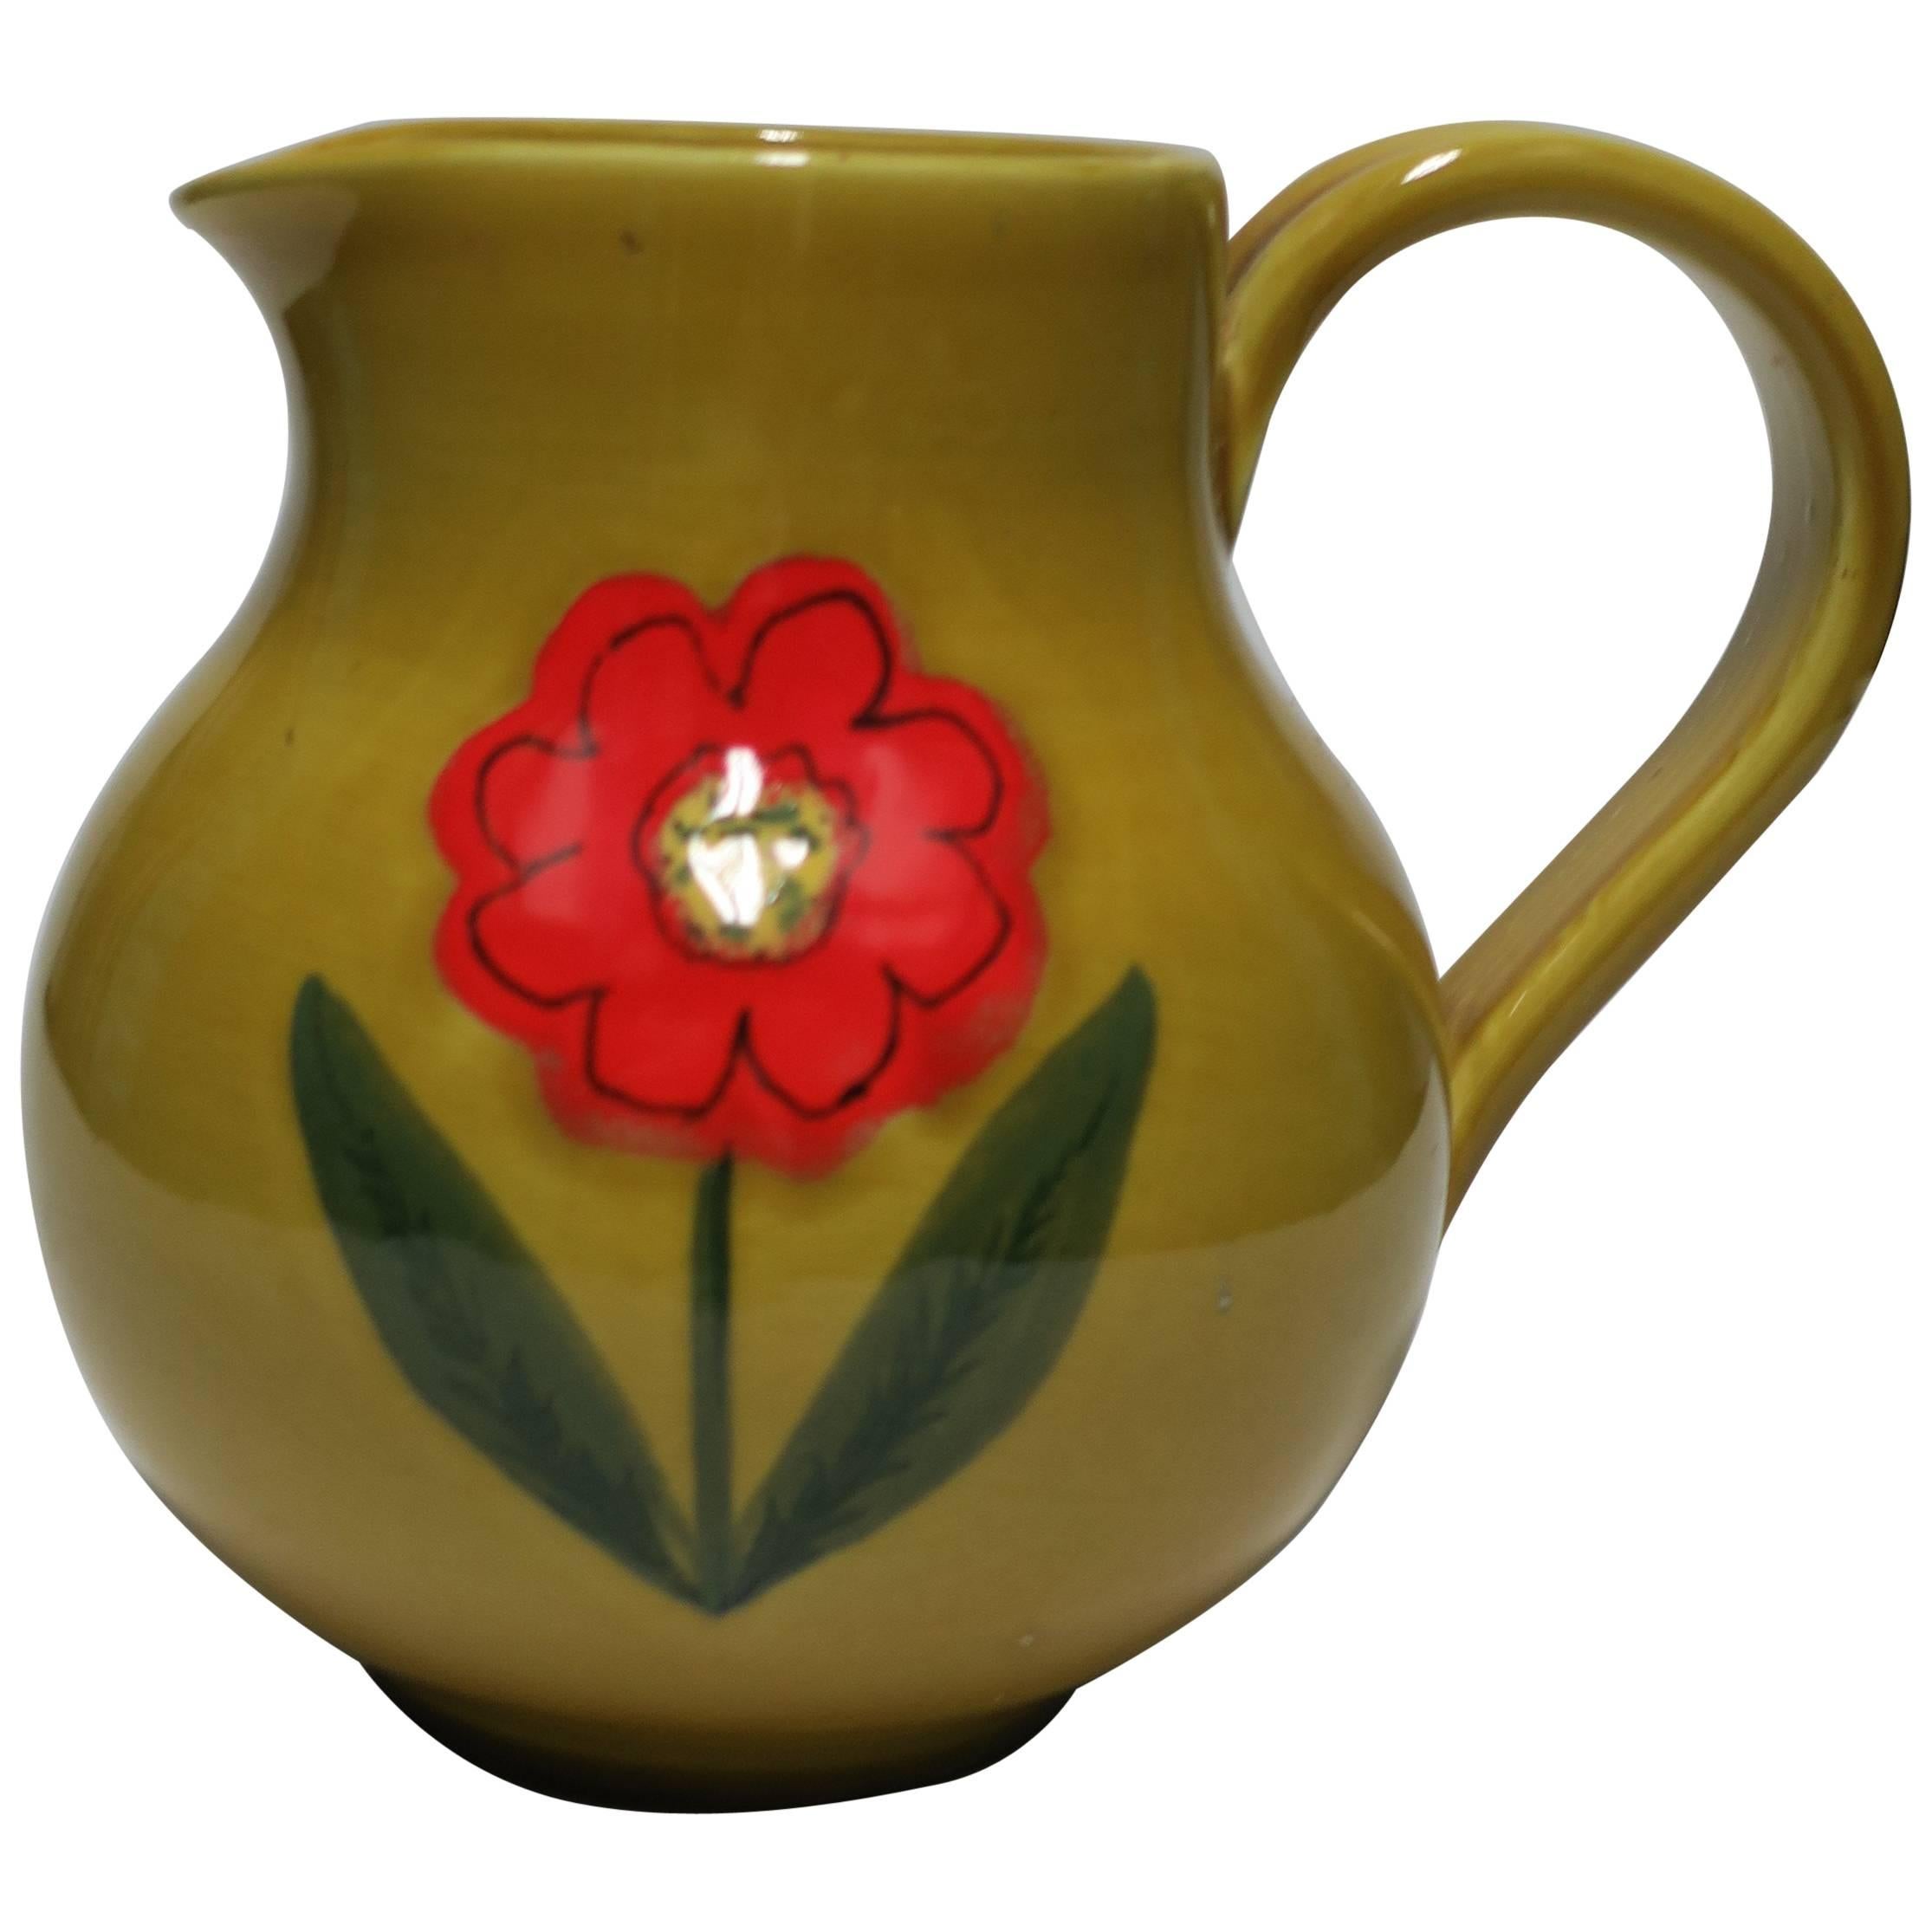 Italian Ceramic Pottery Pitcher or Vase